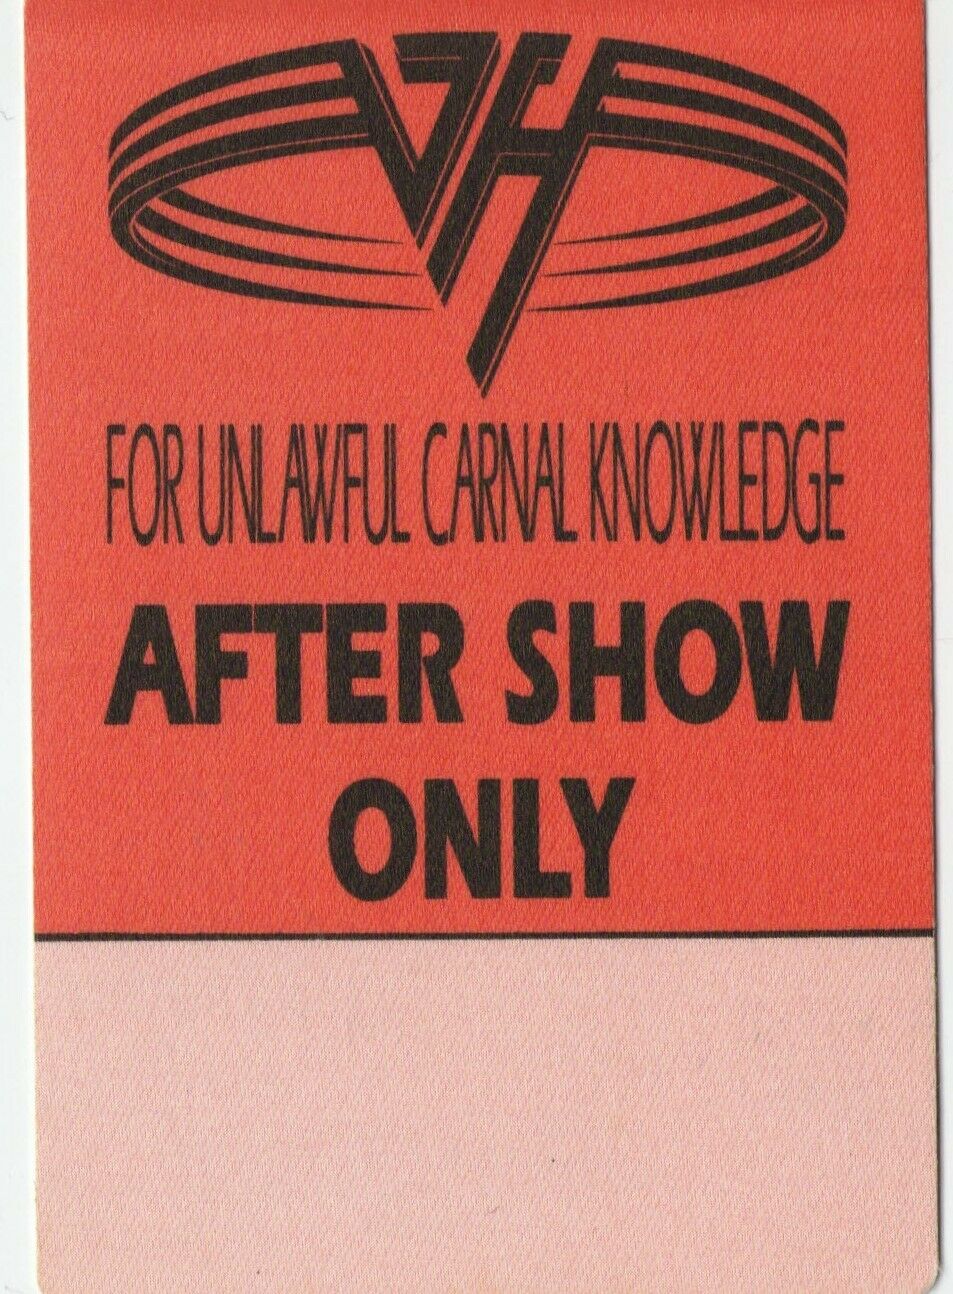 Van Halen Backstage Pass Unlawful Carnal Knowledge Tour